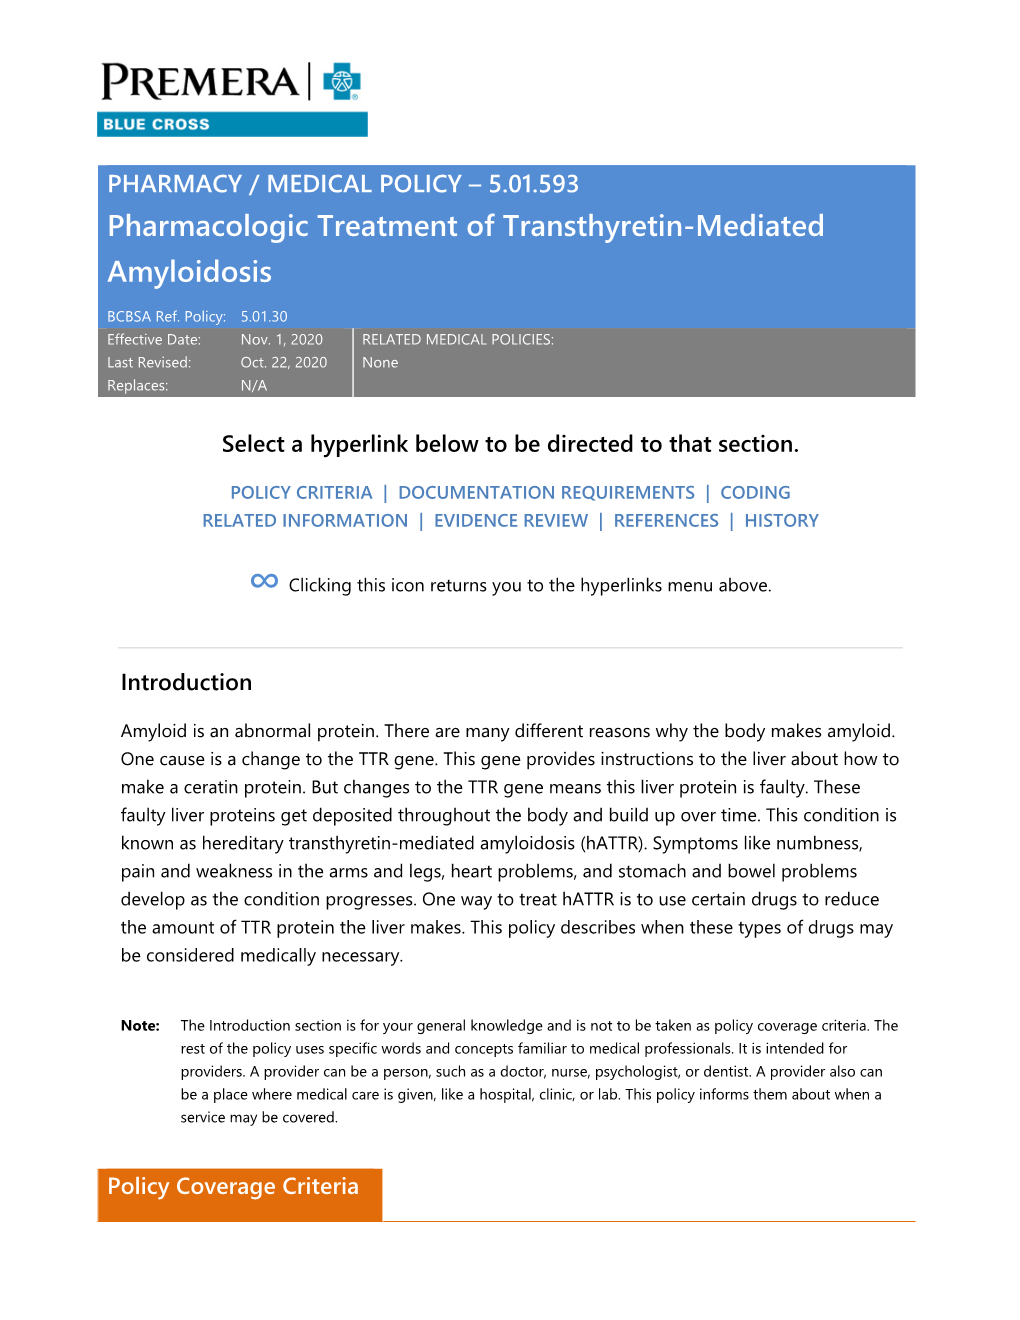 Pharmacologic Treatment of Transthyretin-Mediated Amyloidosis